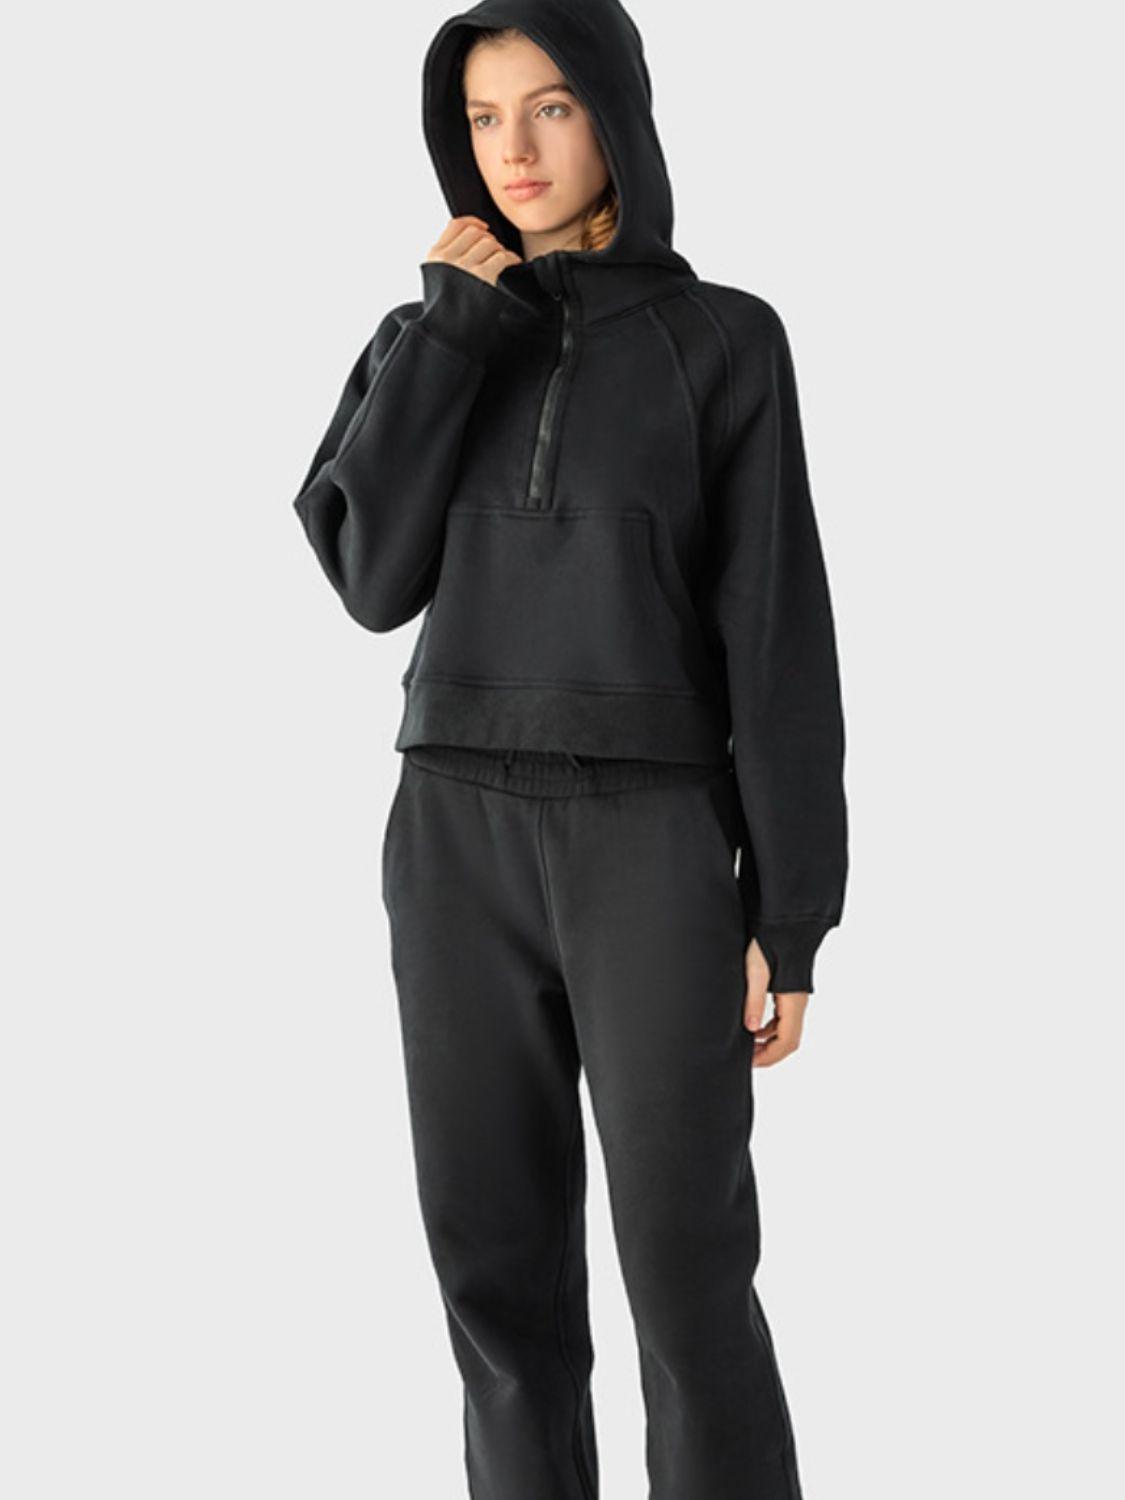 Half-Zip Long Sleeve Sports Hoodie - Lab Fashion, Home & Health